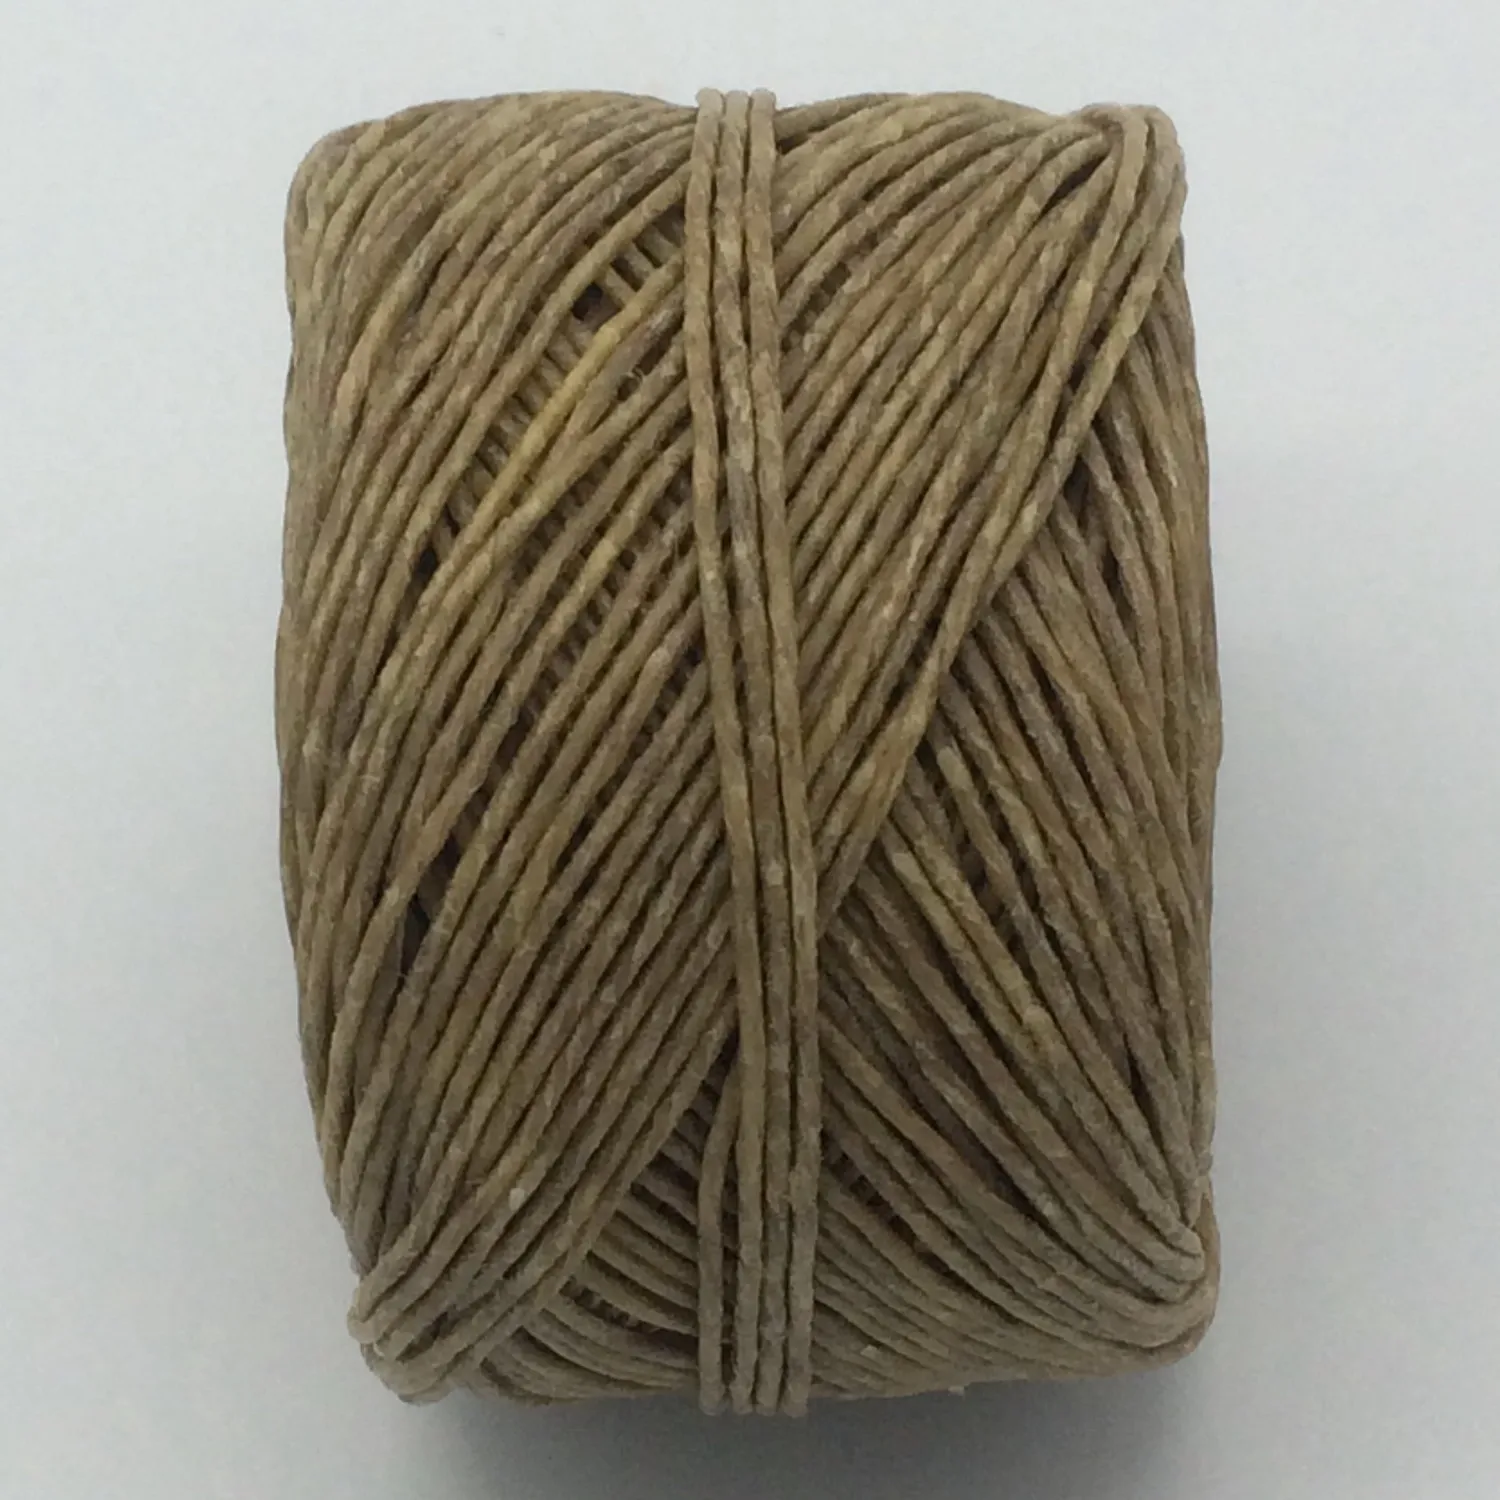 1 Piece hemp wick roll 1.2mm 200feet ,yellow color hemp twine used